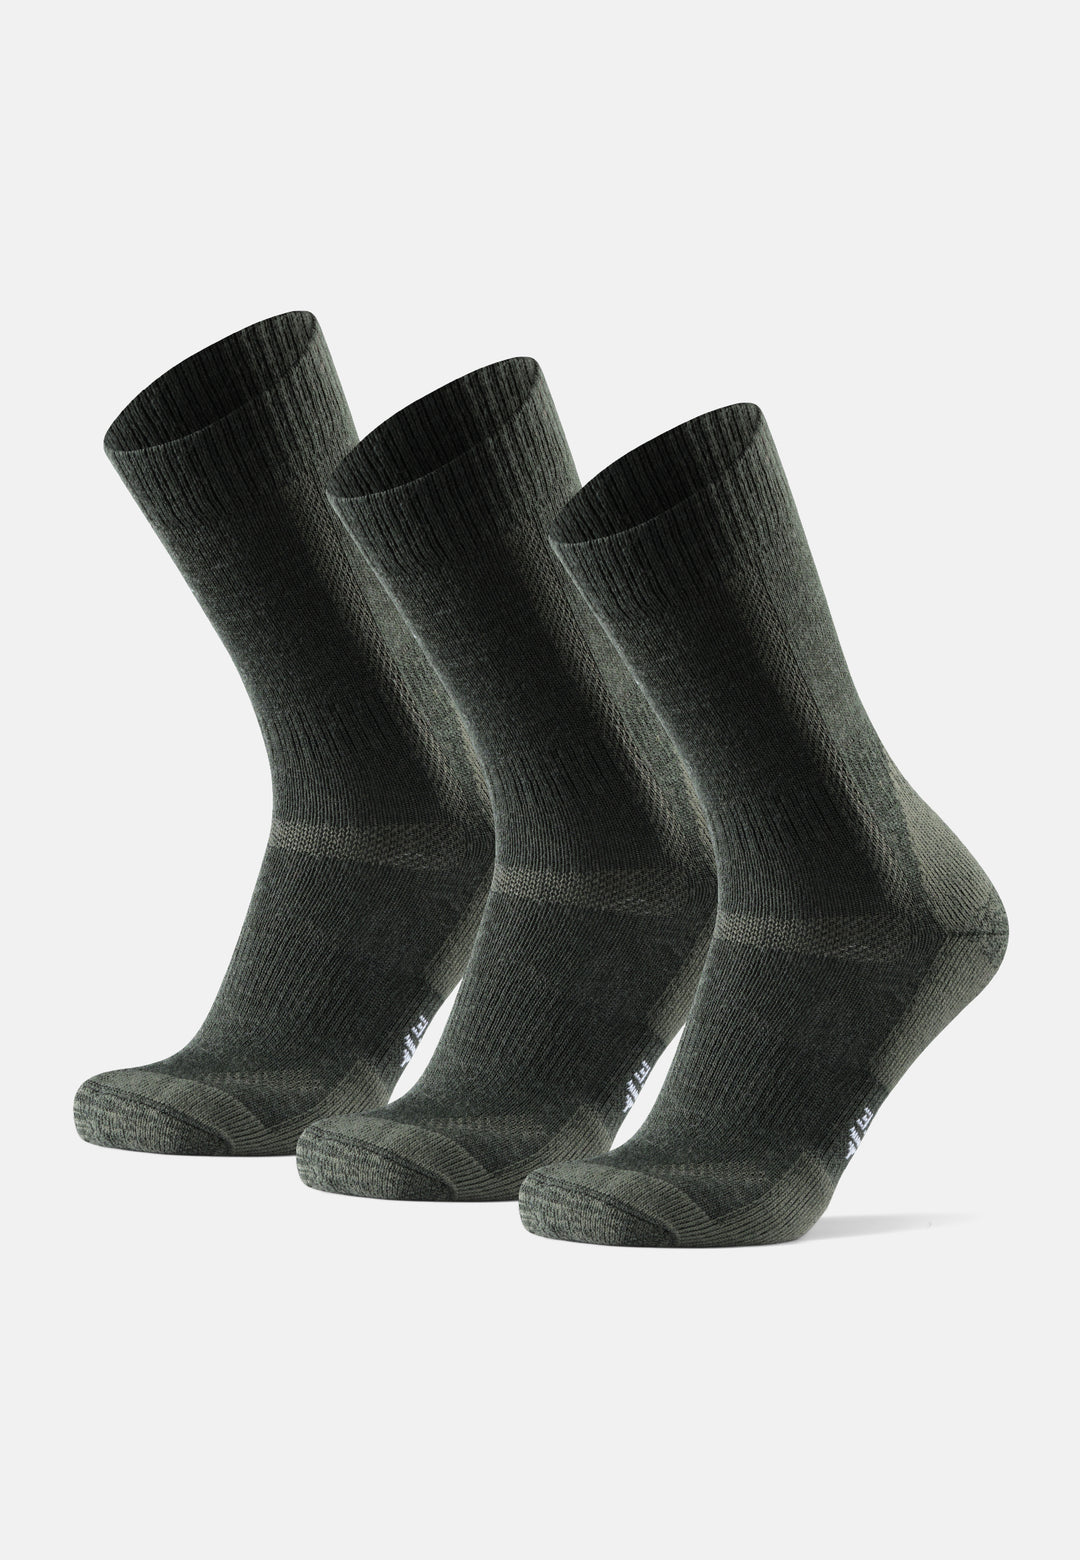 Danish Endurance Men's 6.5-8.5 Dark Green Merino Wool Light Hiking Socks  NWT